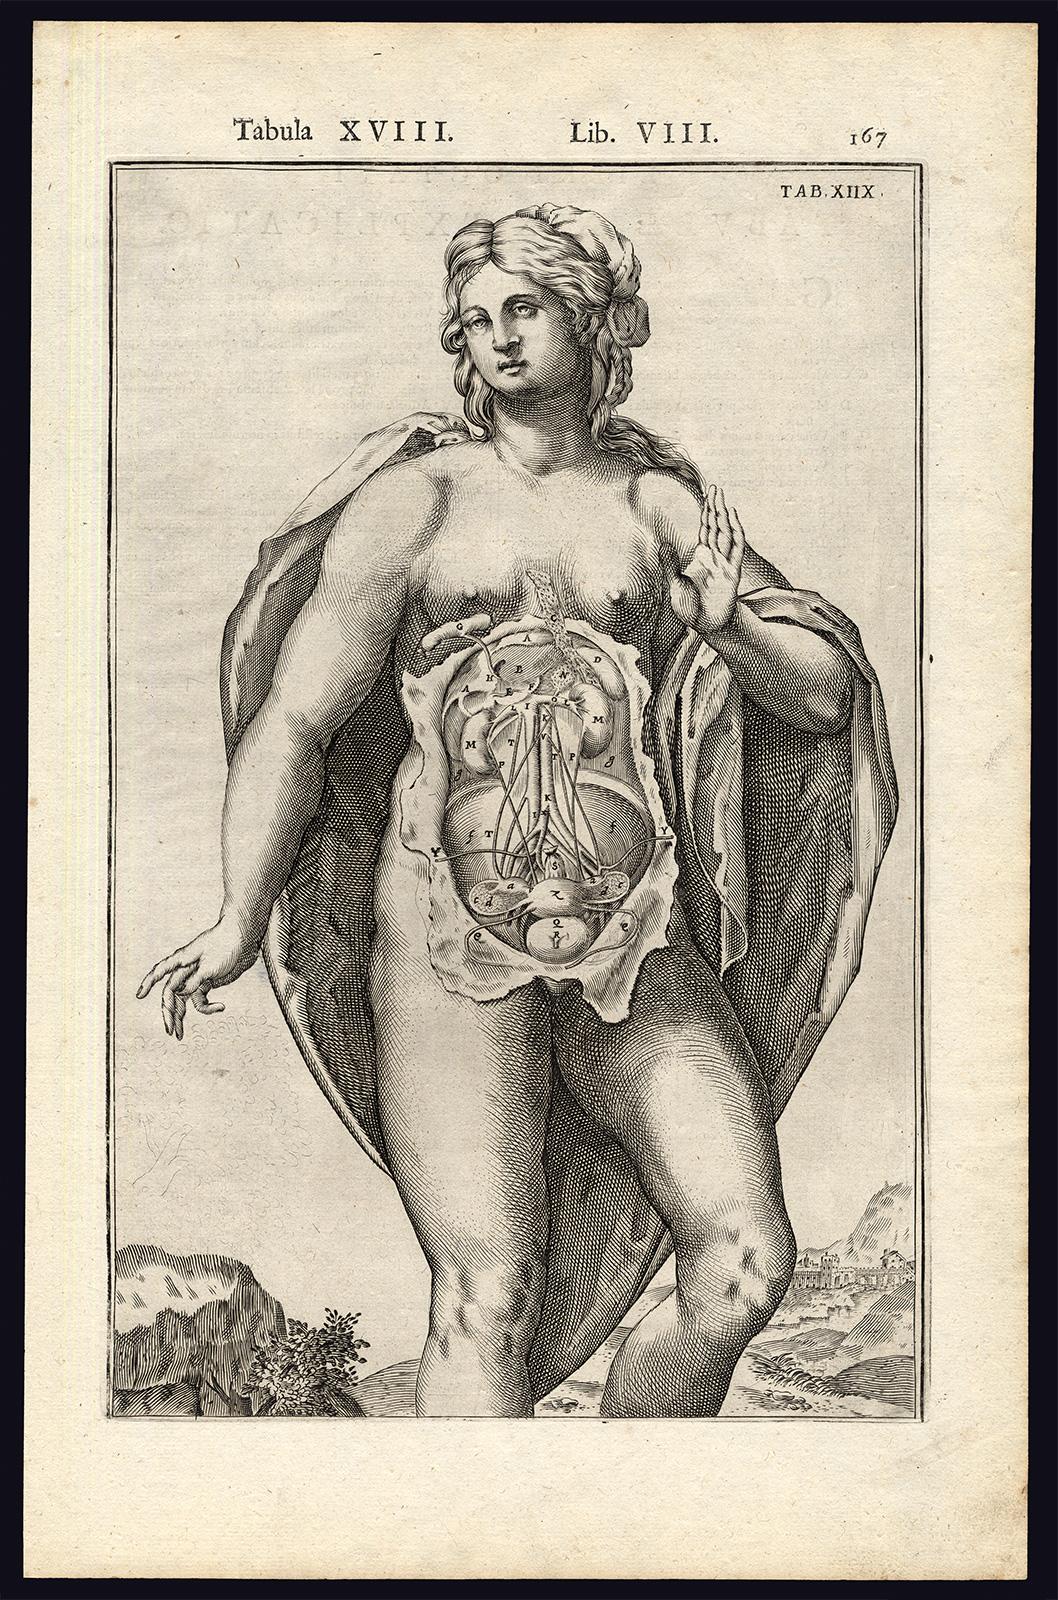 Adrianus Spigelius Print - 2 anatomical prints - Woman's abdomen by Spigelius - Engraving - 17th century